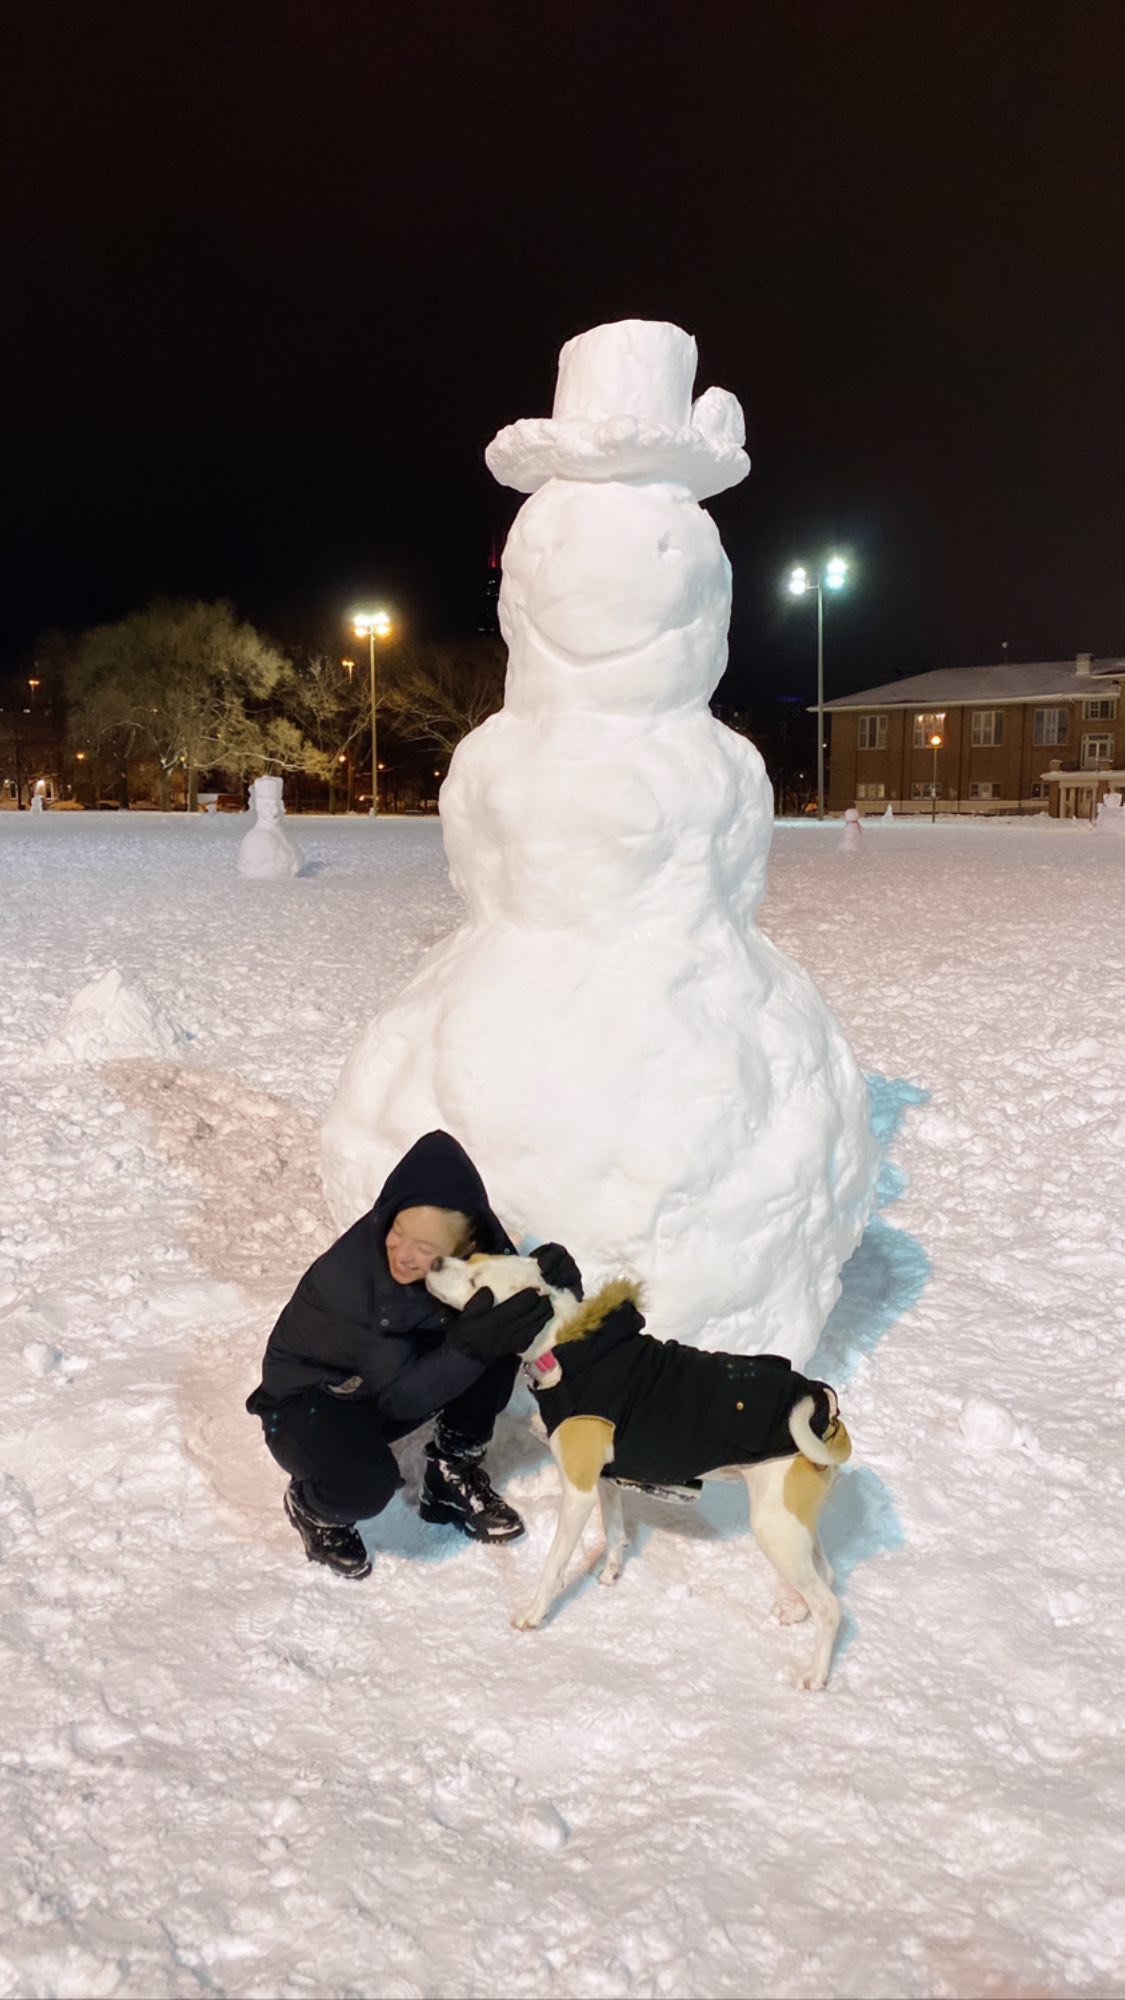 Sydney Sweeney Builds a Snowman Army!